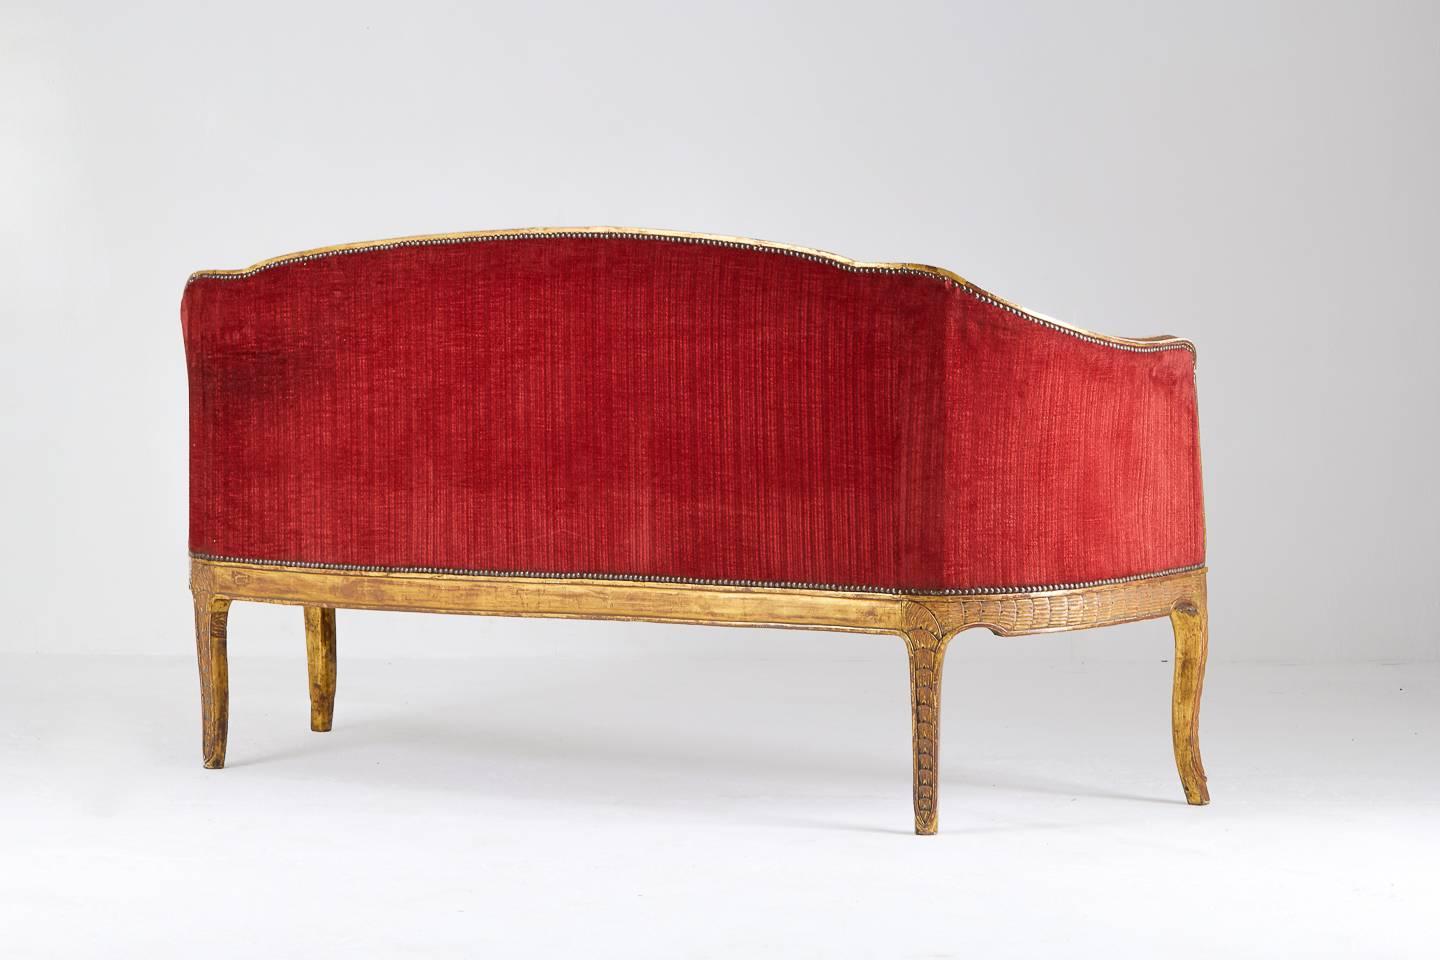 Hand-Carved 18th Century Italian Gilt Sofa with Original Gilding